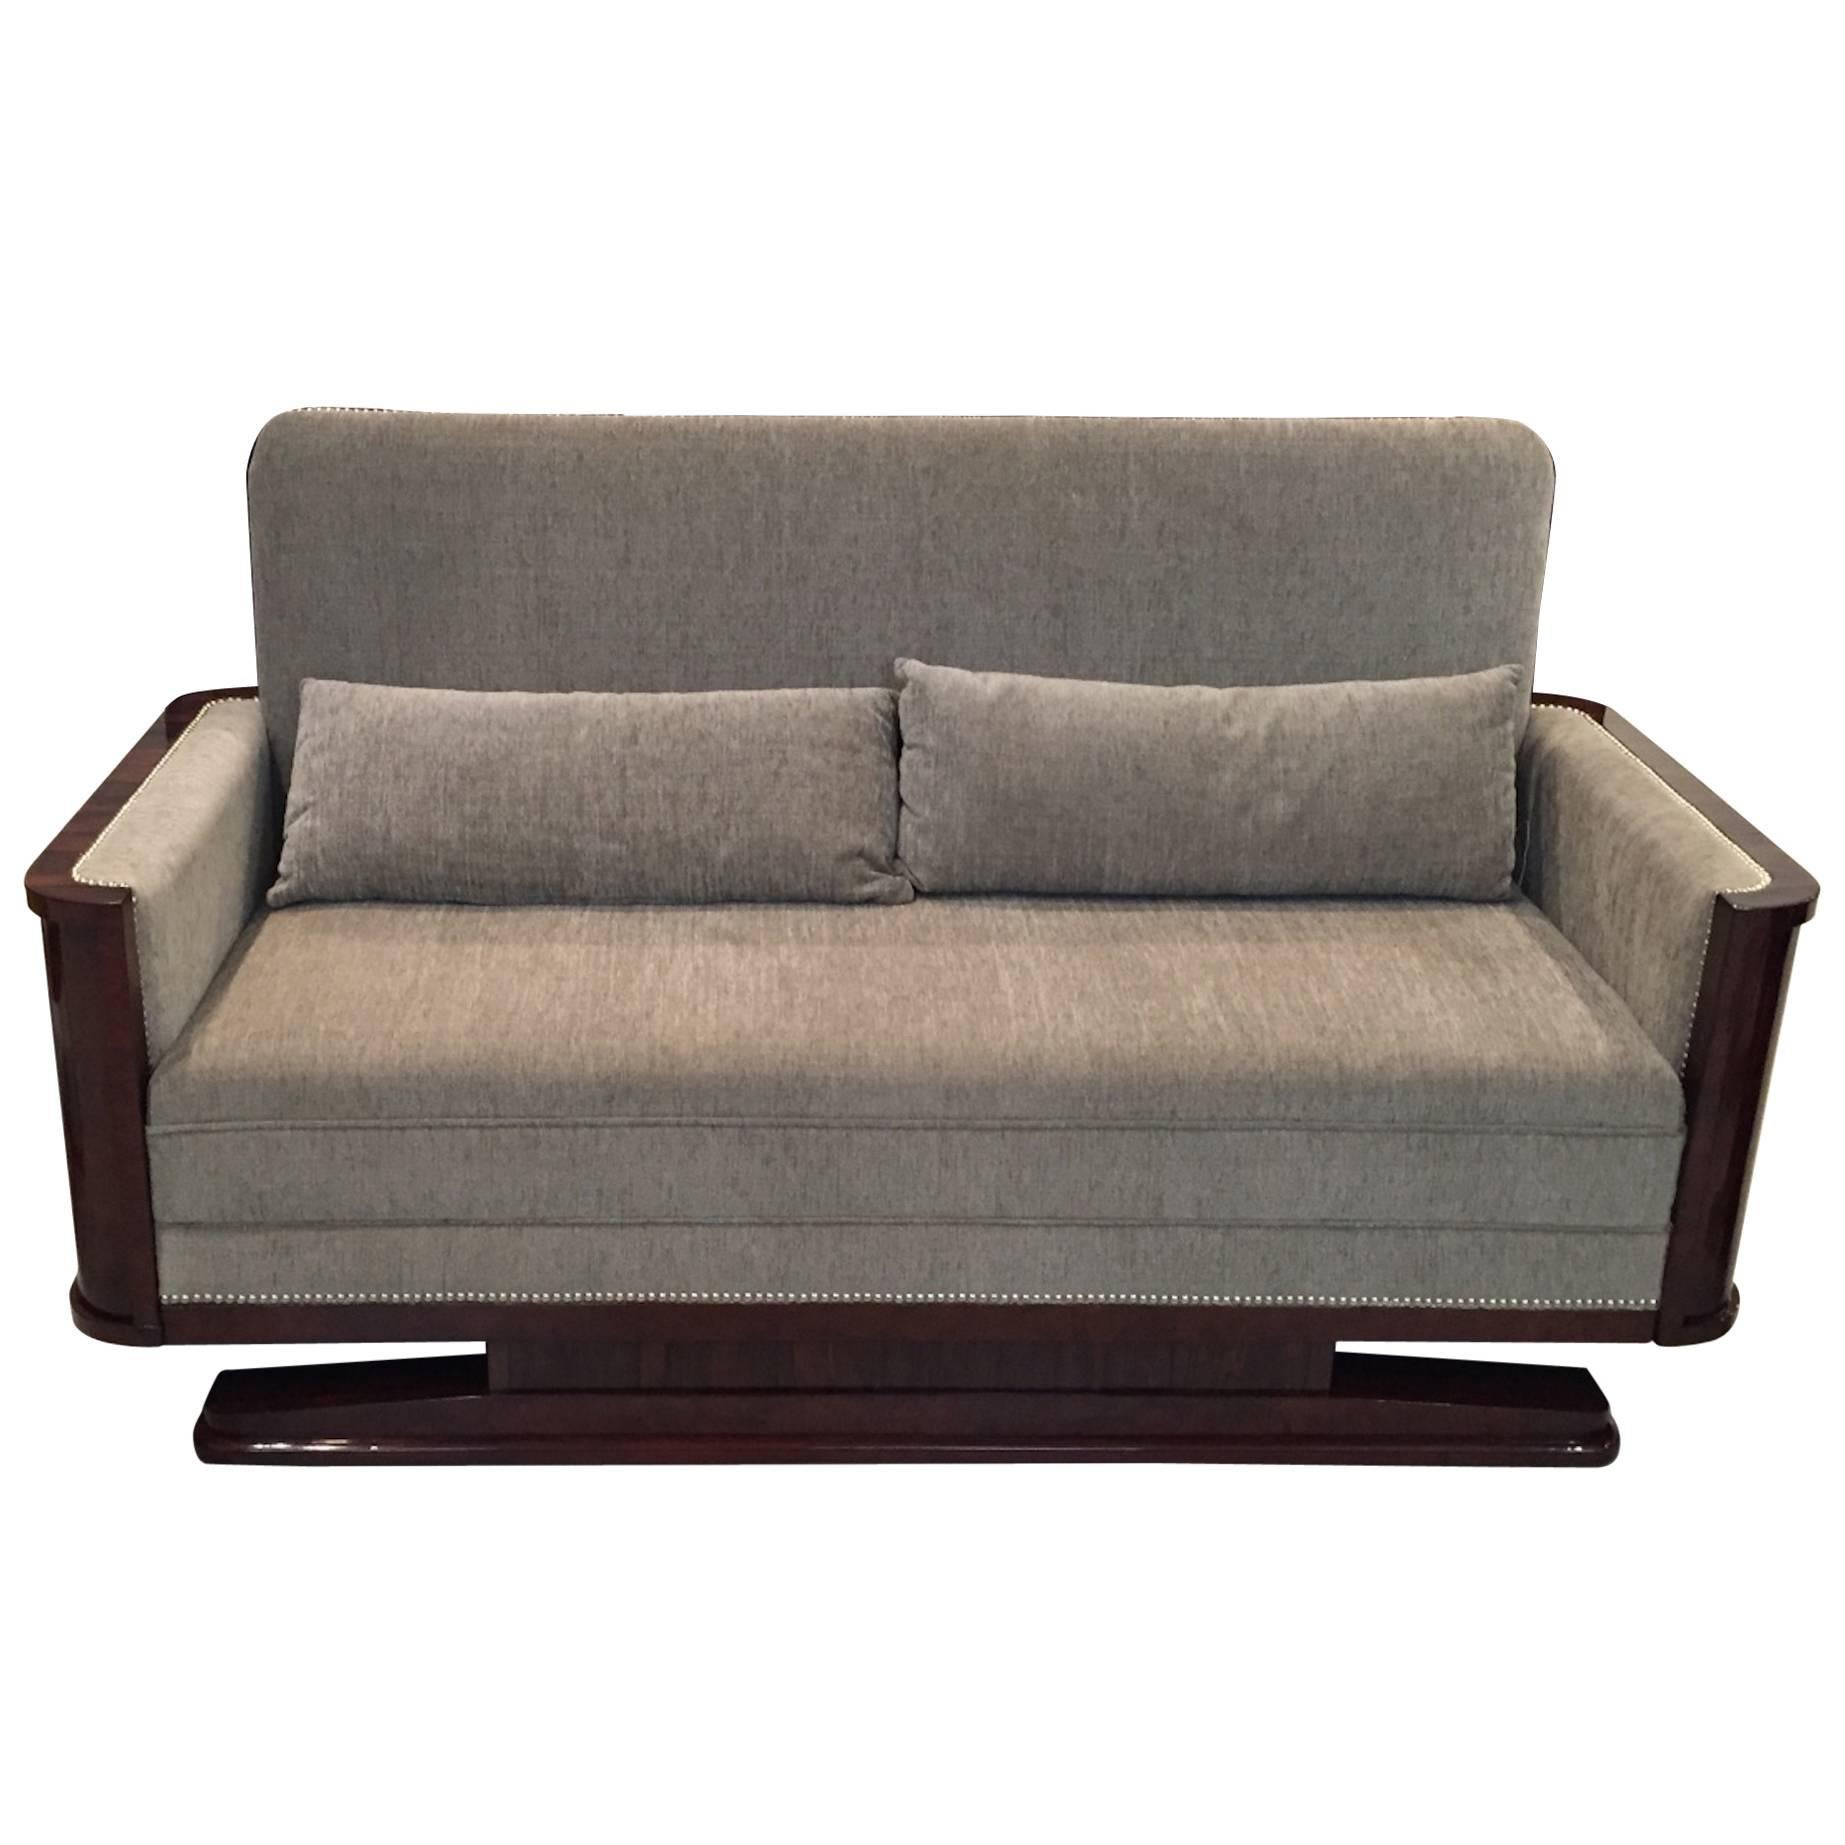 French Art Deco Macassar Sofa For Sale